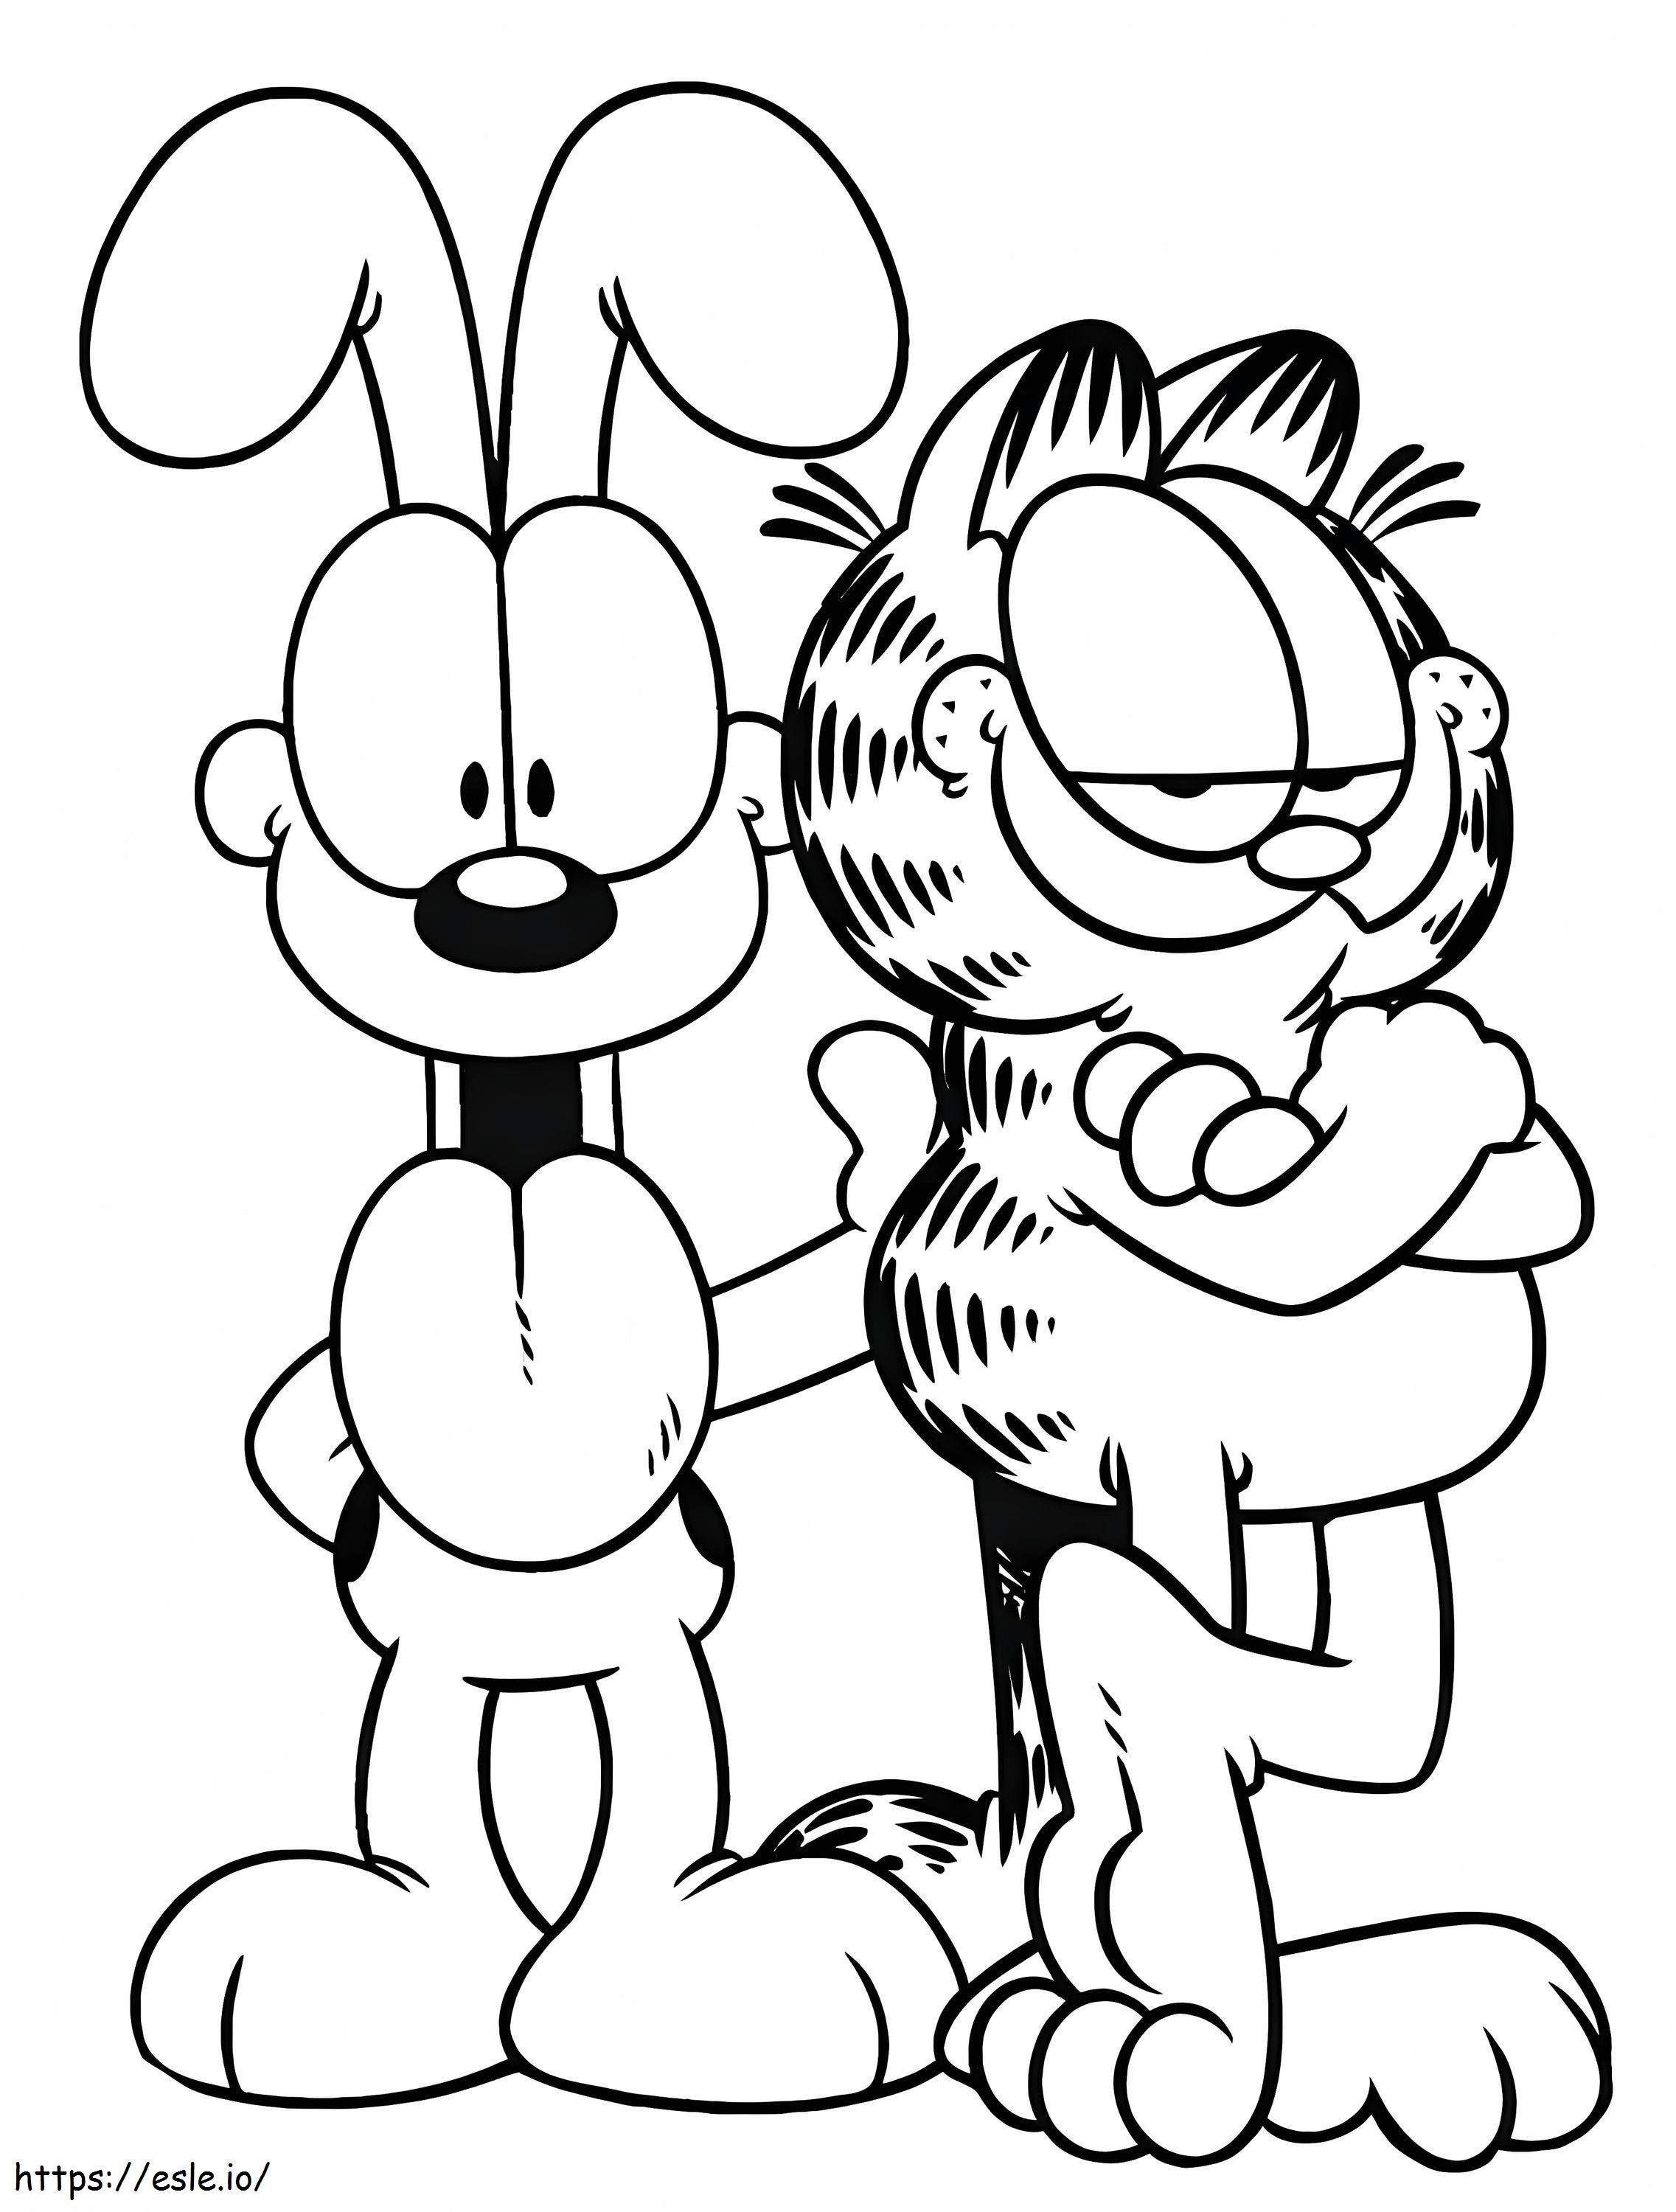 Garfield Y Odie coloring page